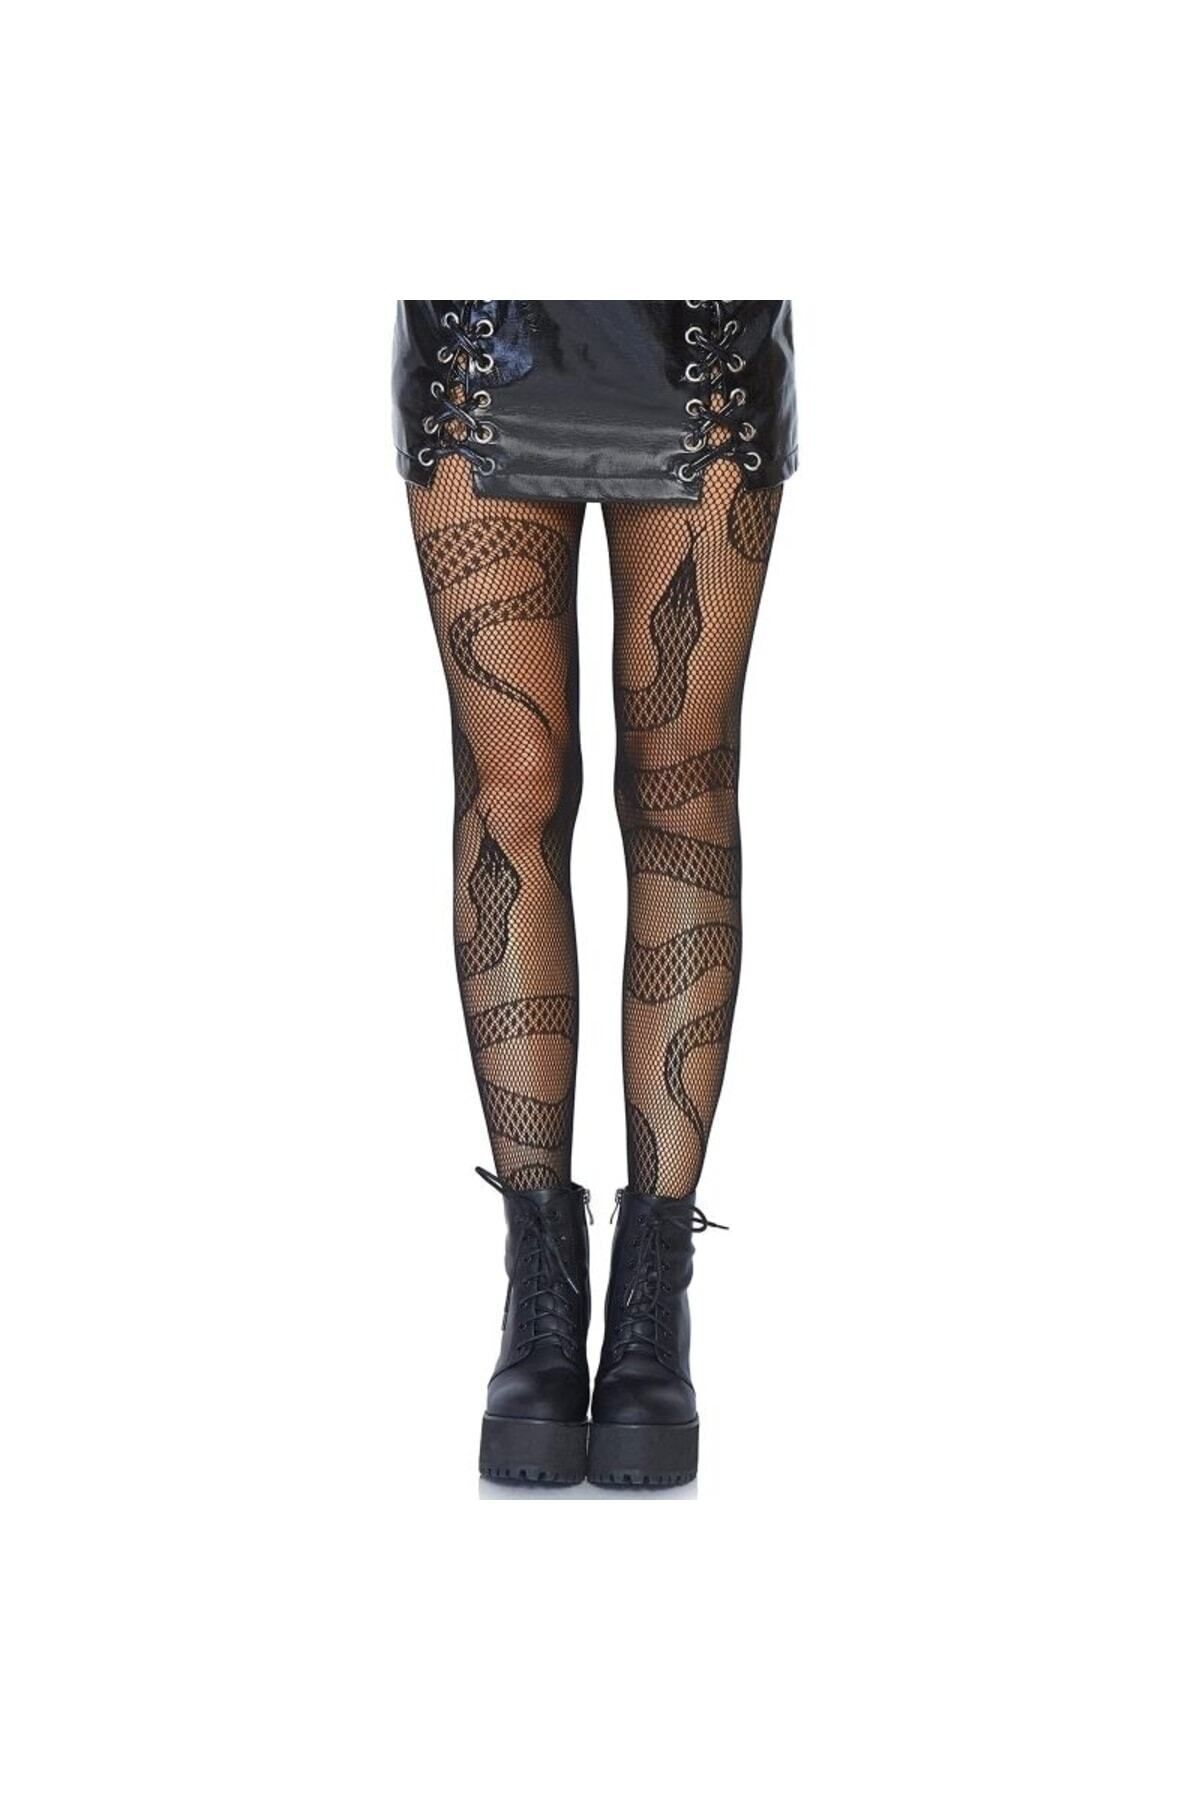 VEGAROKS Punk Gothic Lolita Yılan Desenli Ithal Külotlu Çorap